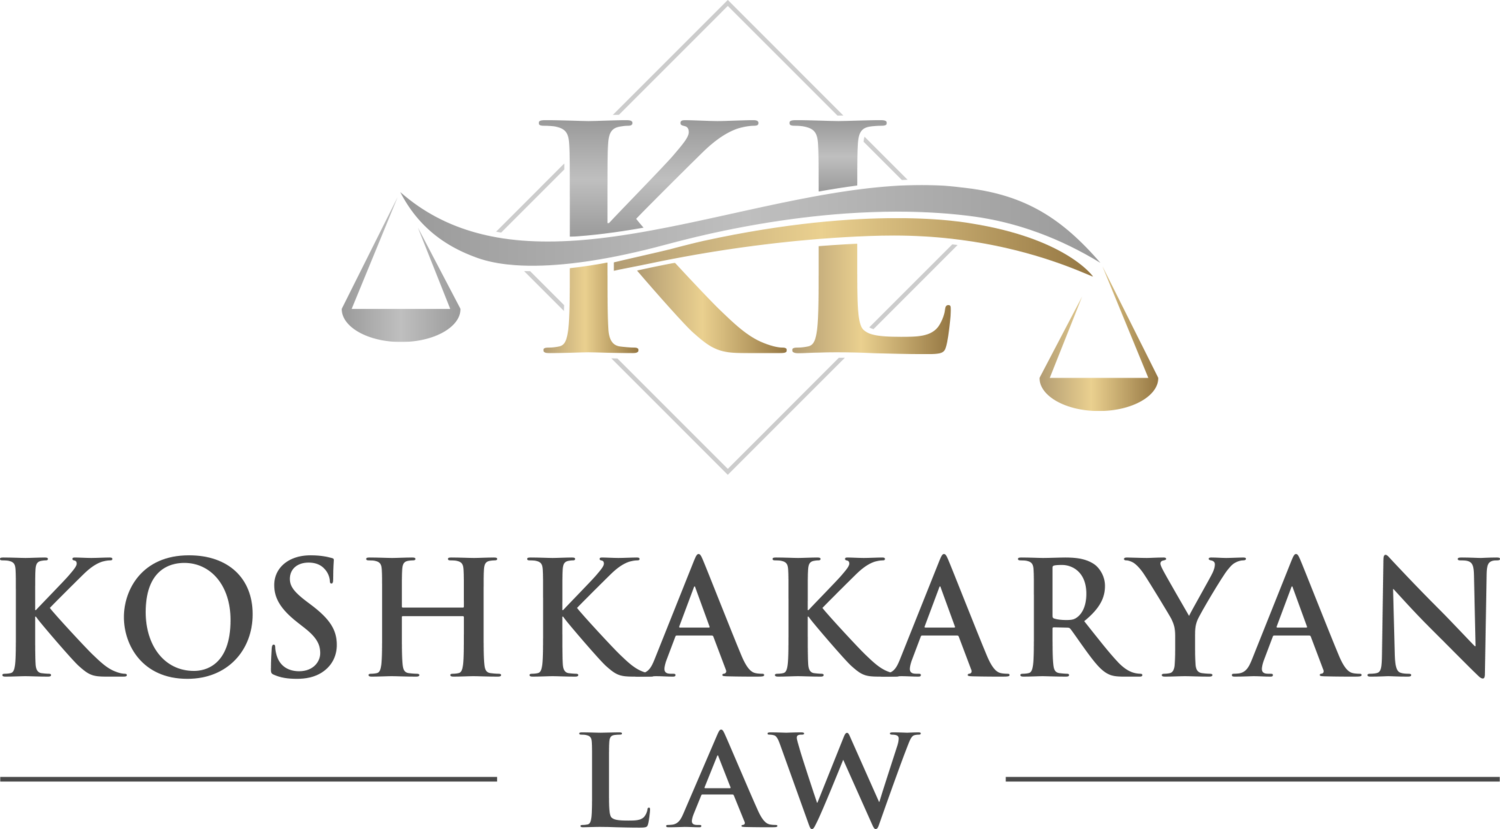 Koshkakaryan Law, APC